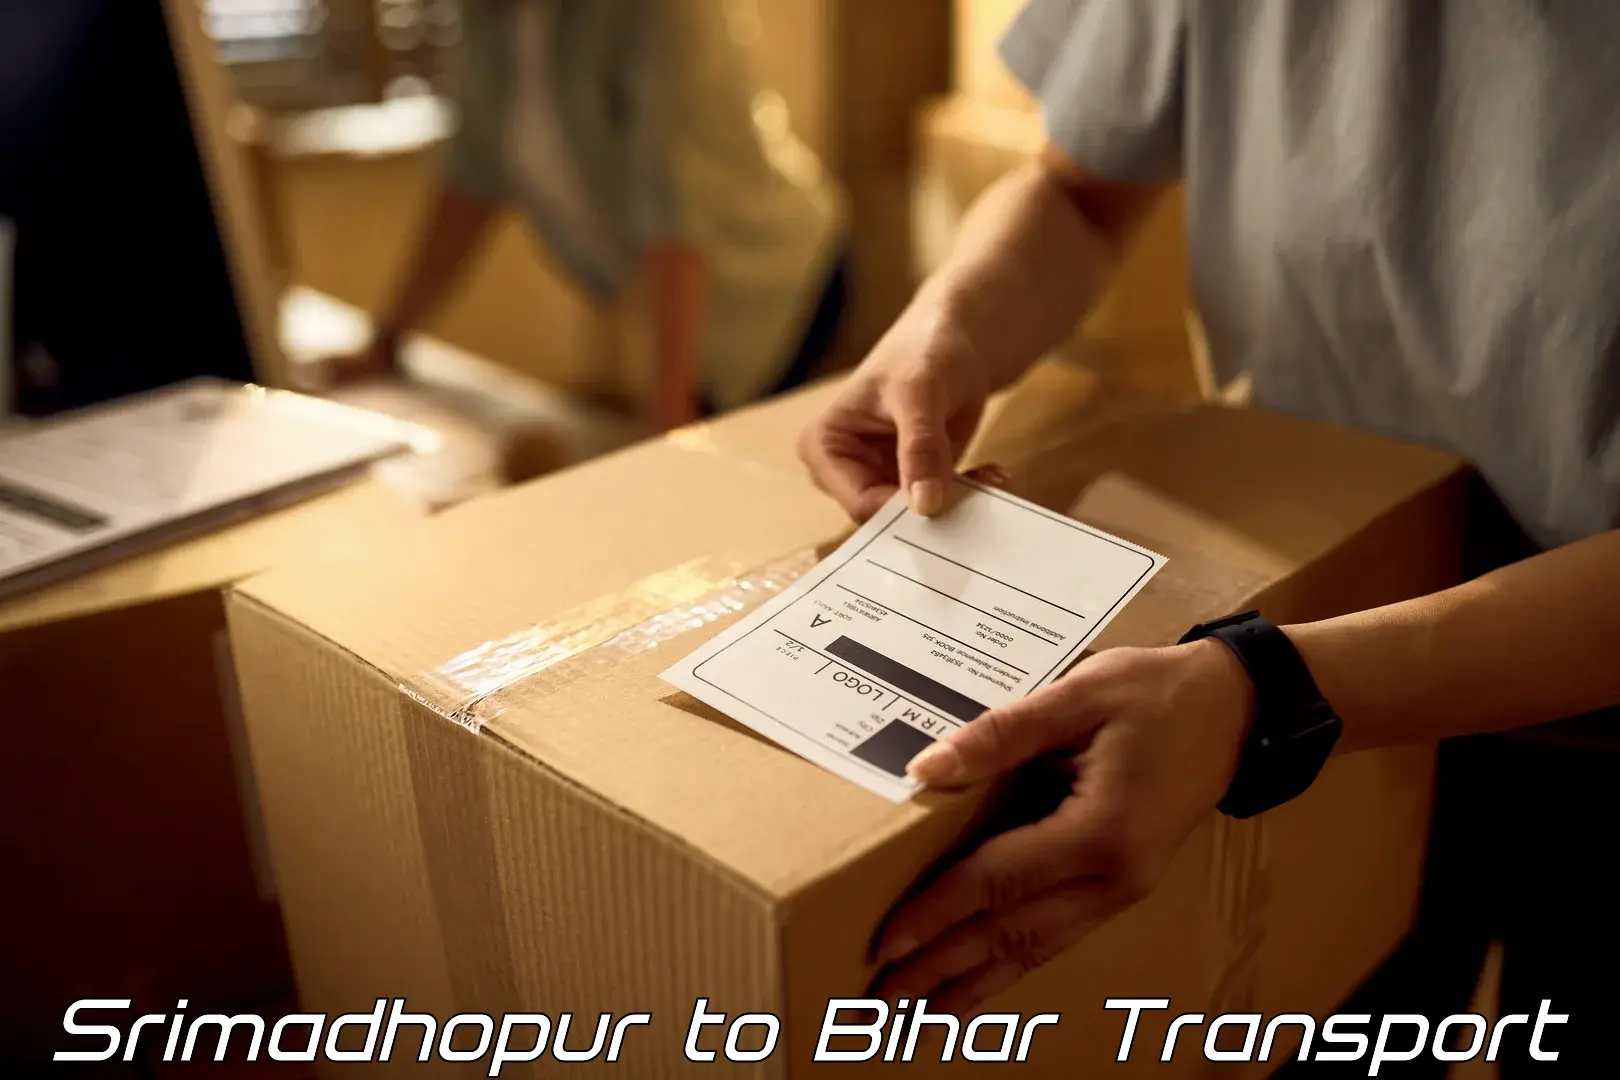 Pick up transport service Srimadhopur to Minapur